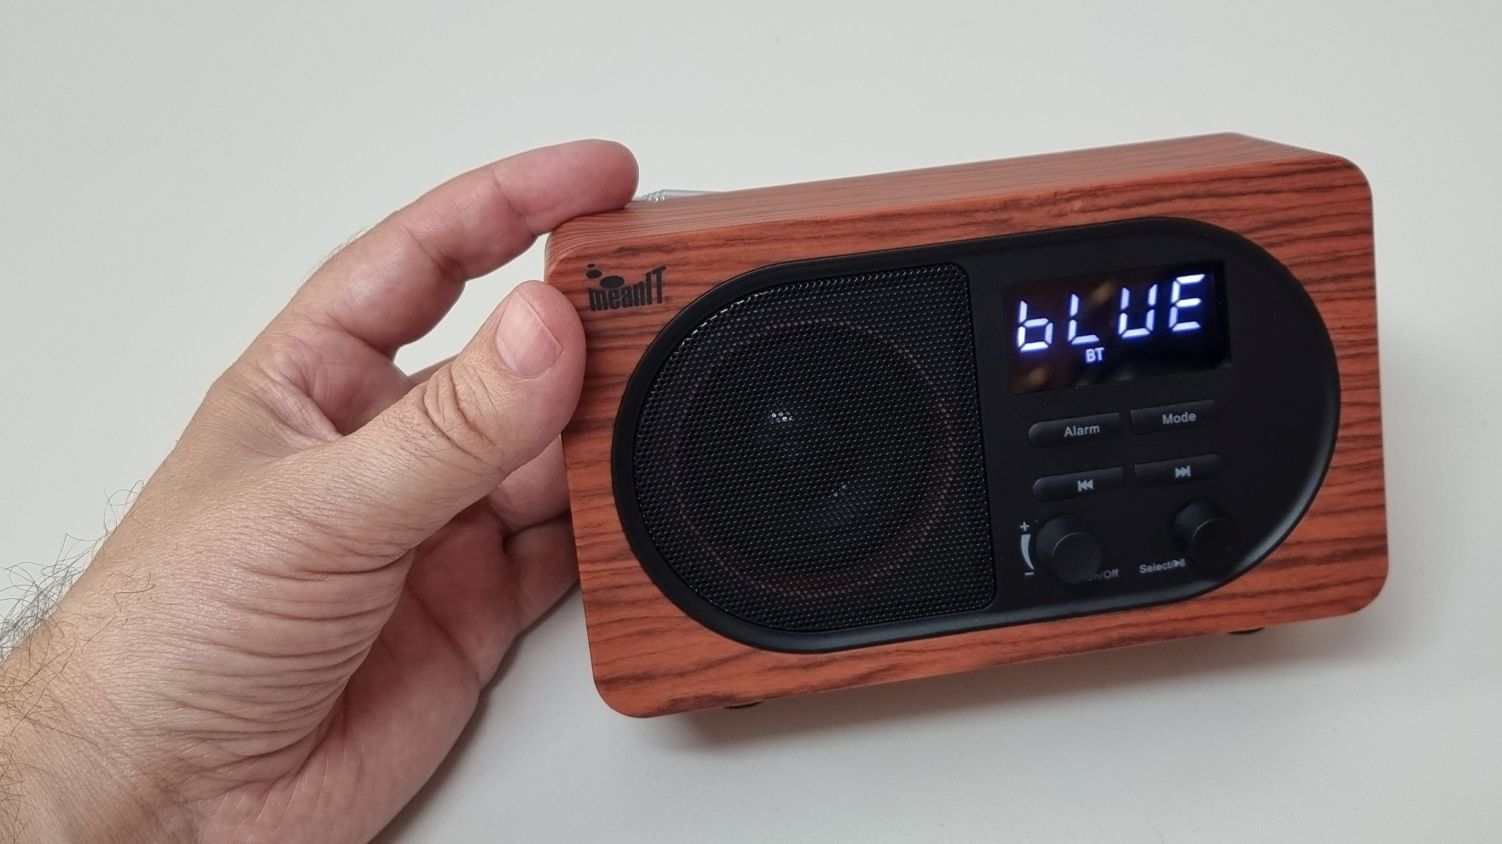 meanIT radio alarm sat i Bluetooth zvucnik B4 3